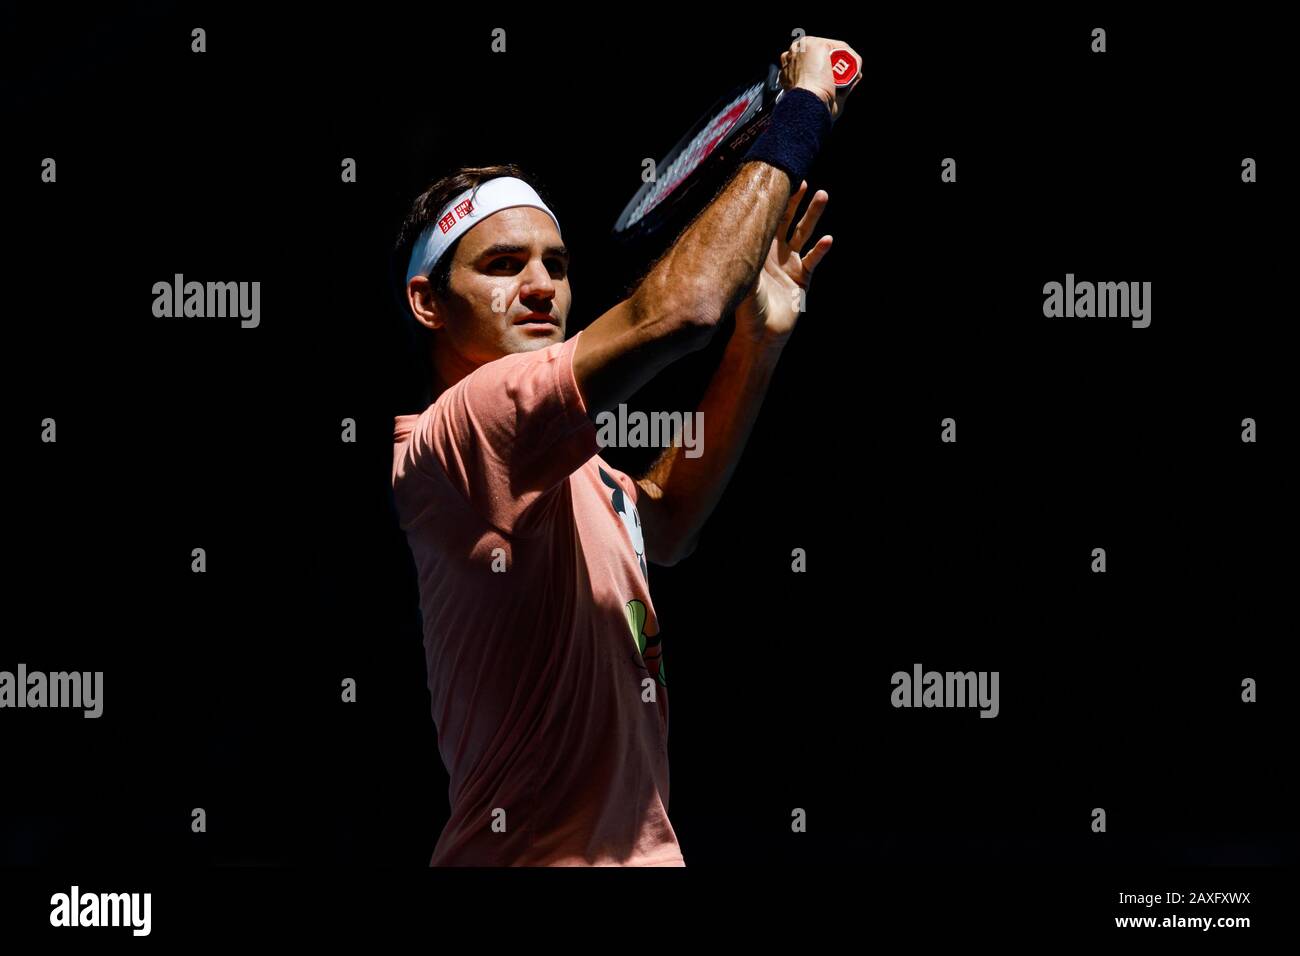 Roger FEDERER (sui) durante il 2020 Australian Open Foto Stock